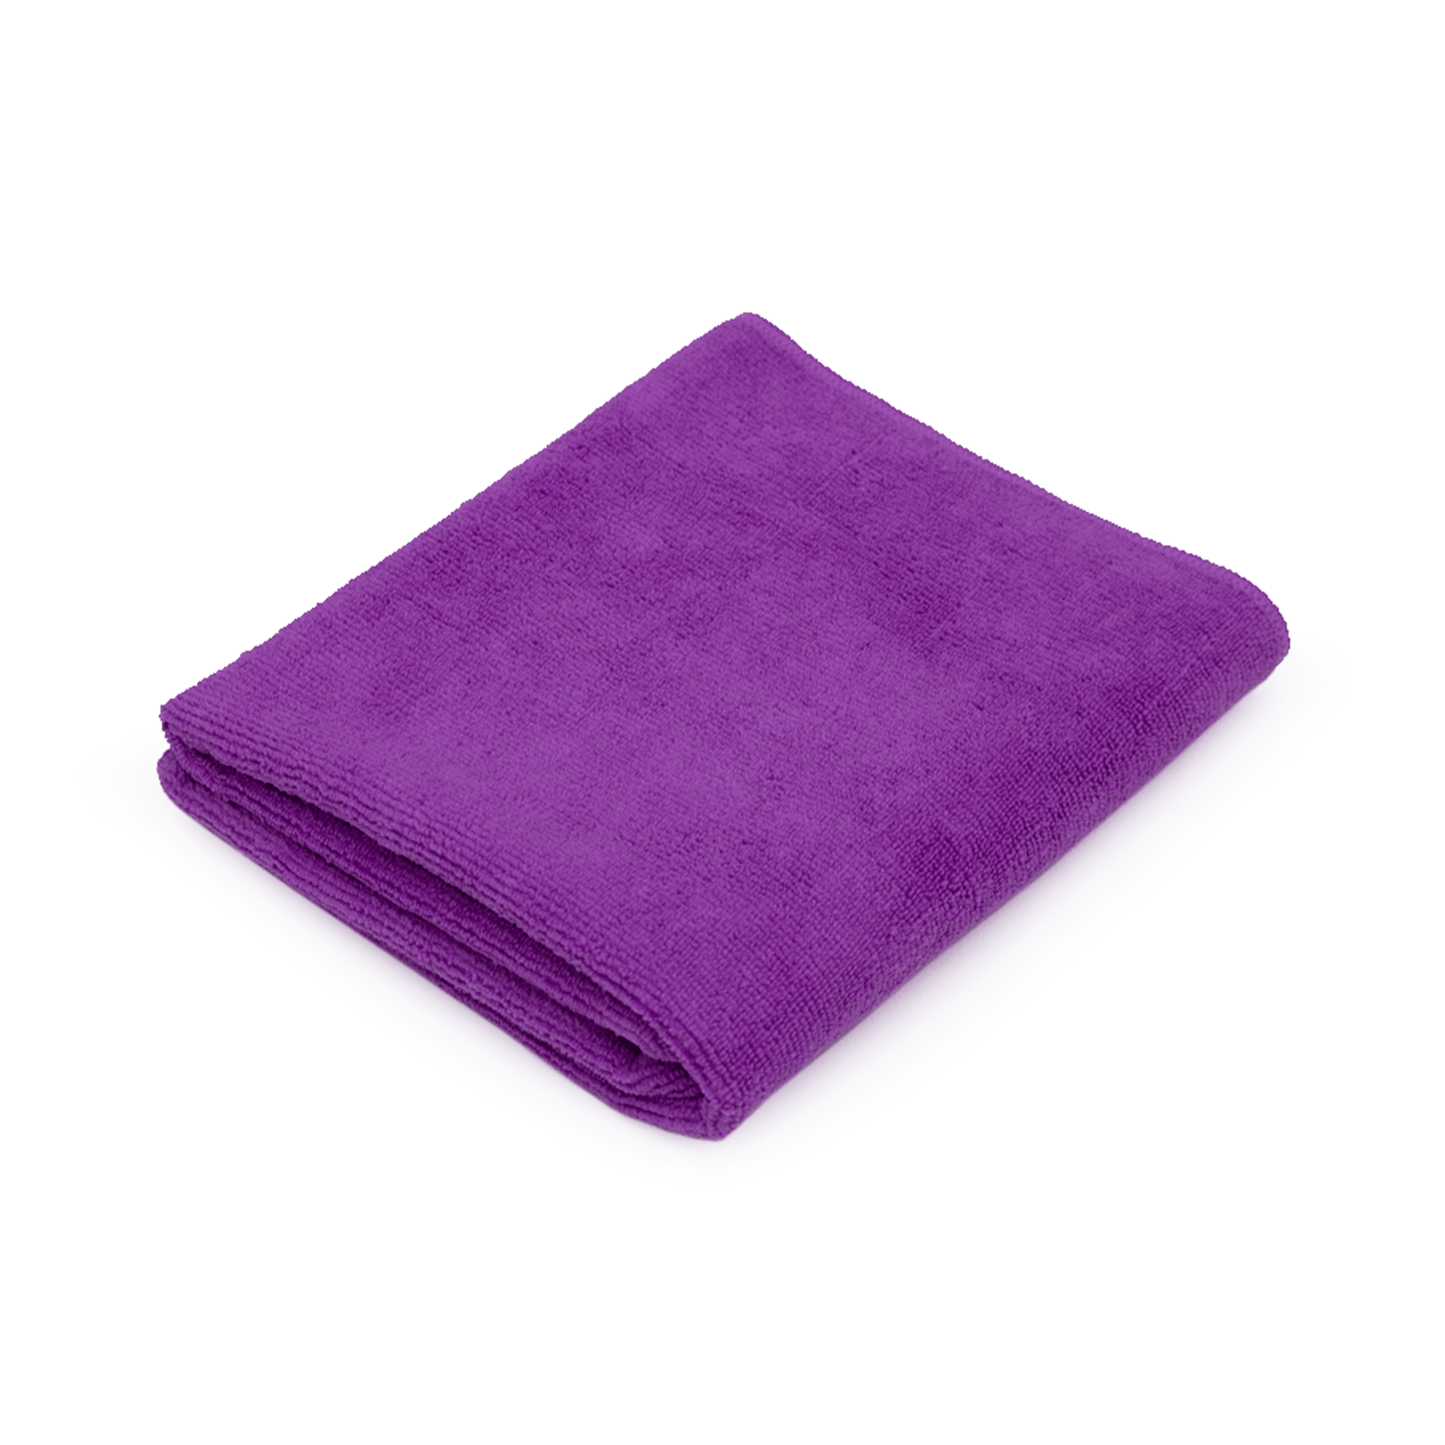 The Microfiber "Car Wash" Towel